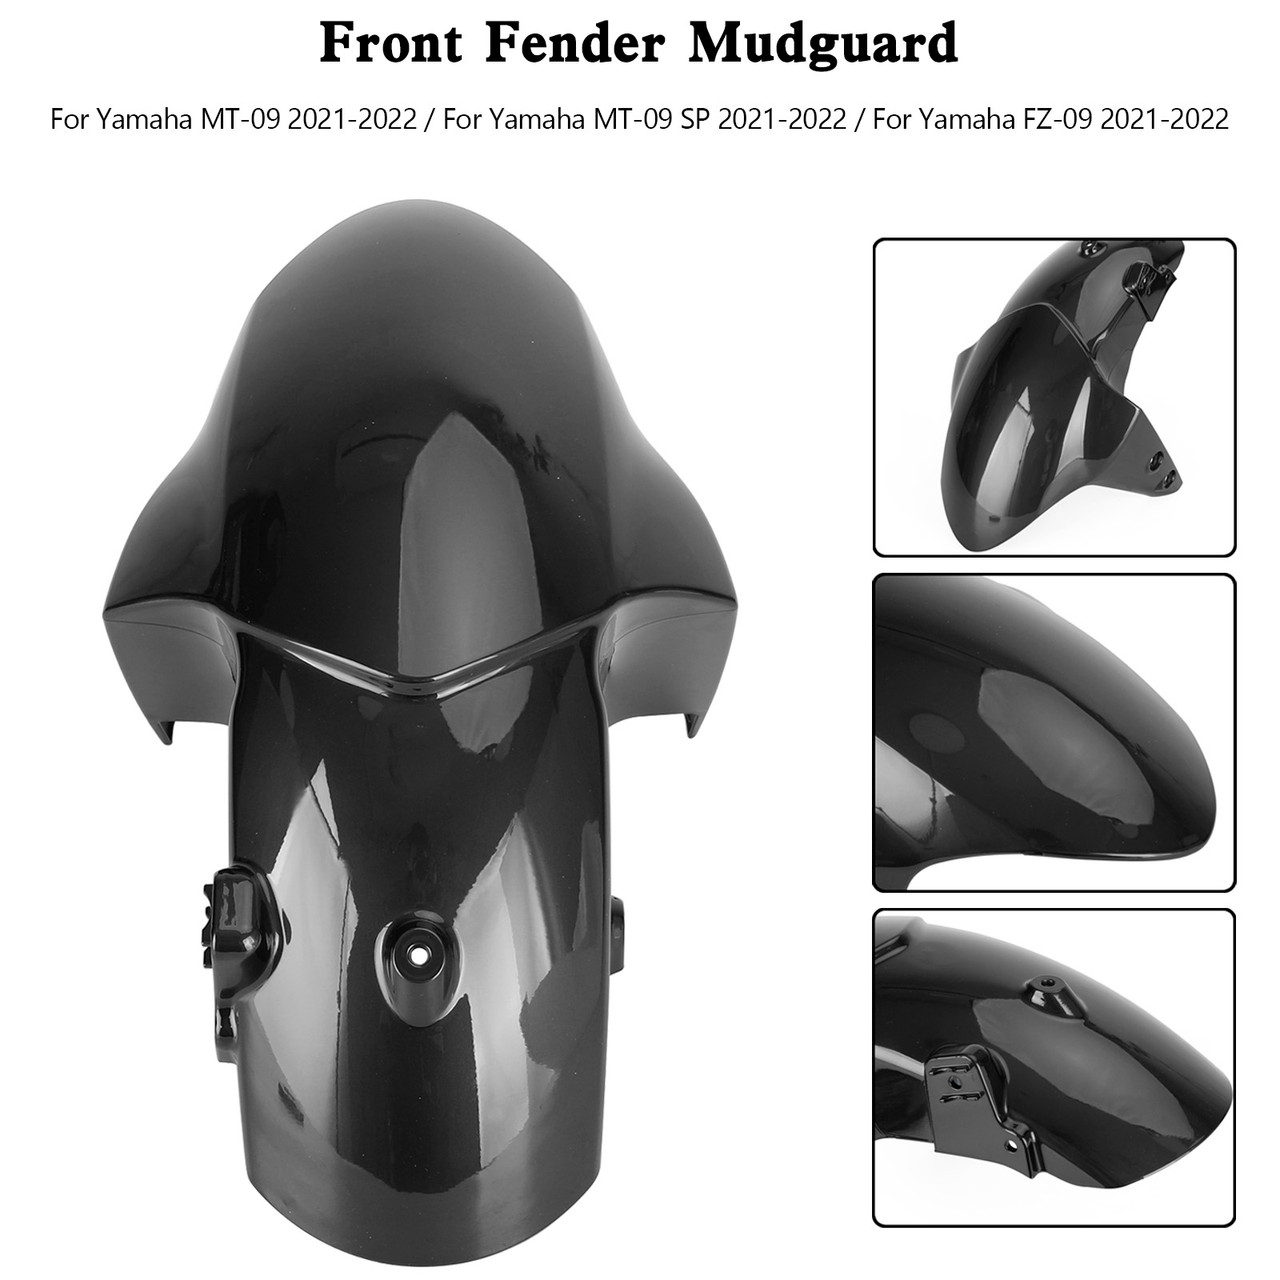 Front Fender Mudguard Fairing For Yamaha MT-09 FZ-09 MT09 SP 2021-2022 BLK